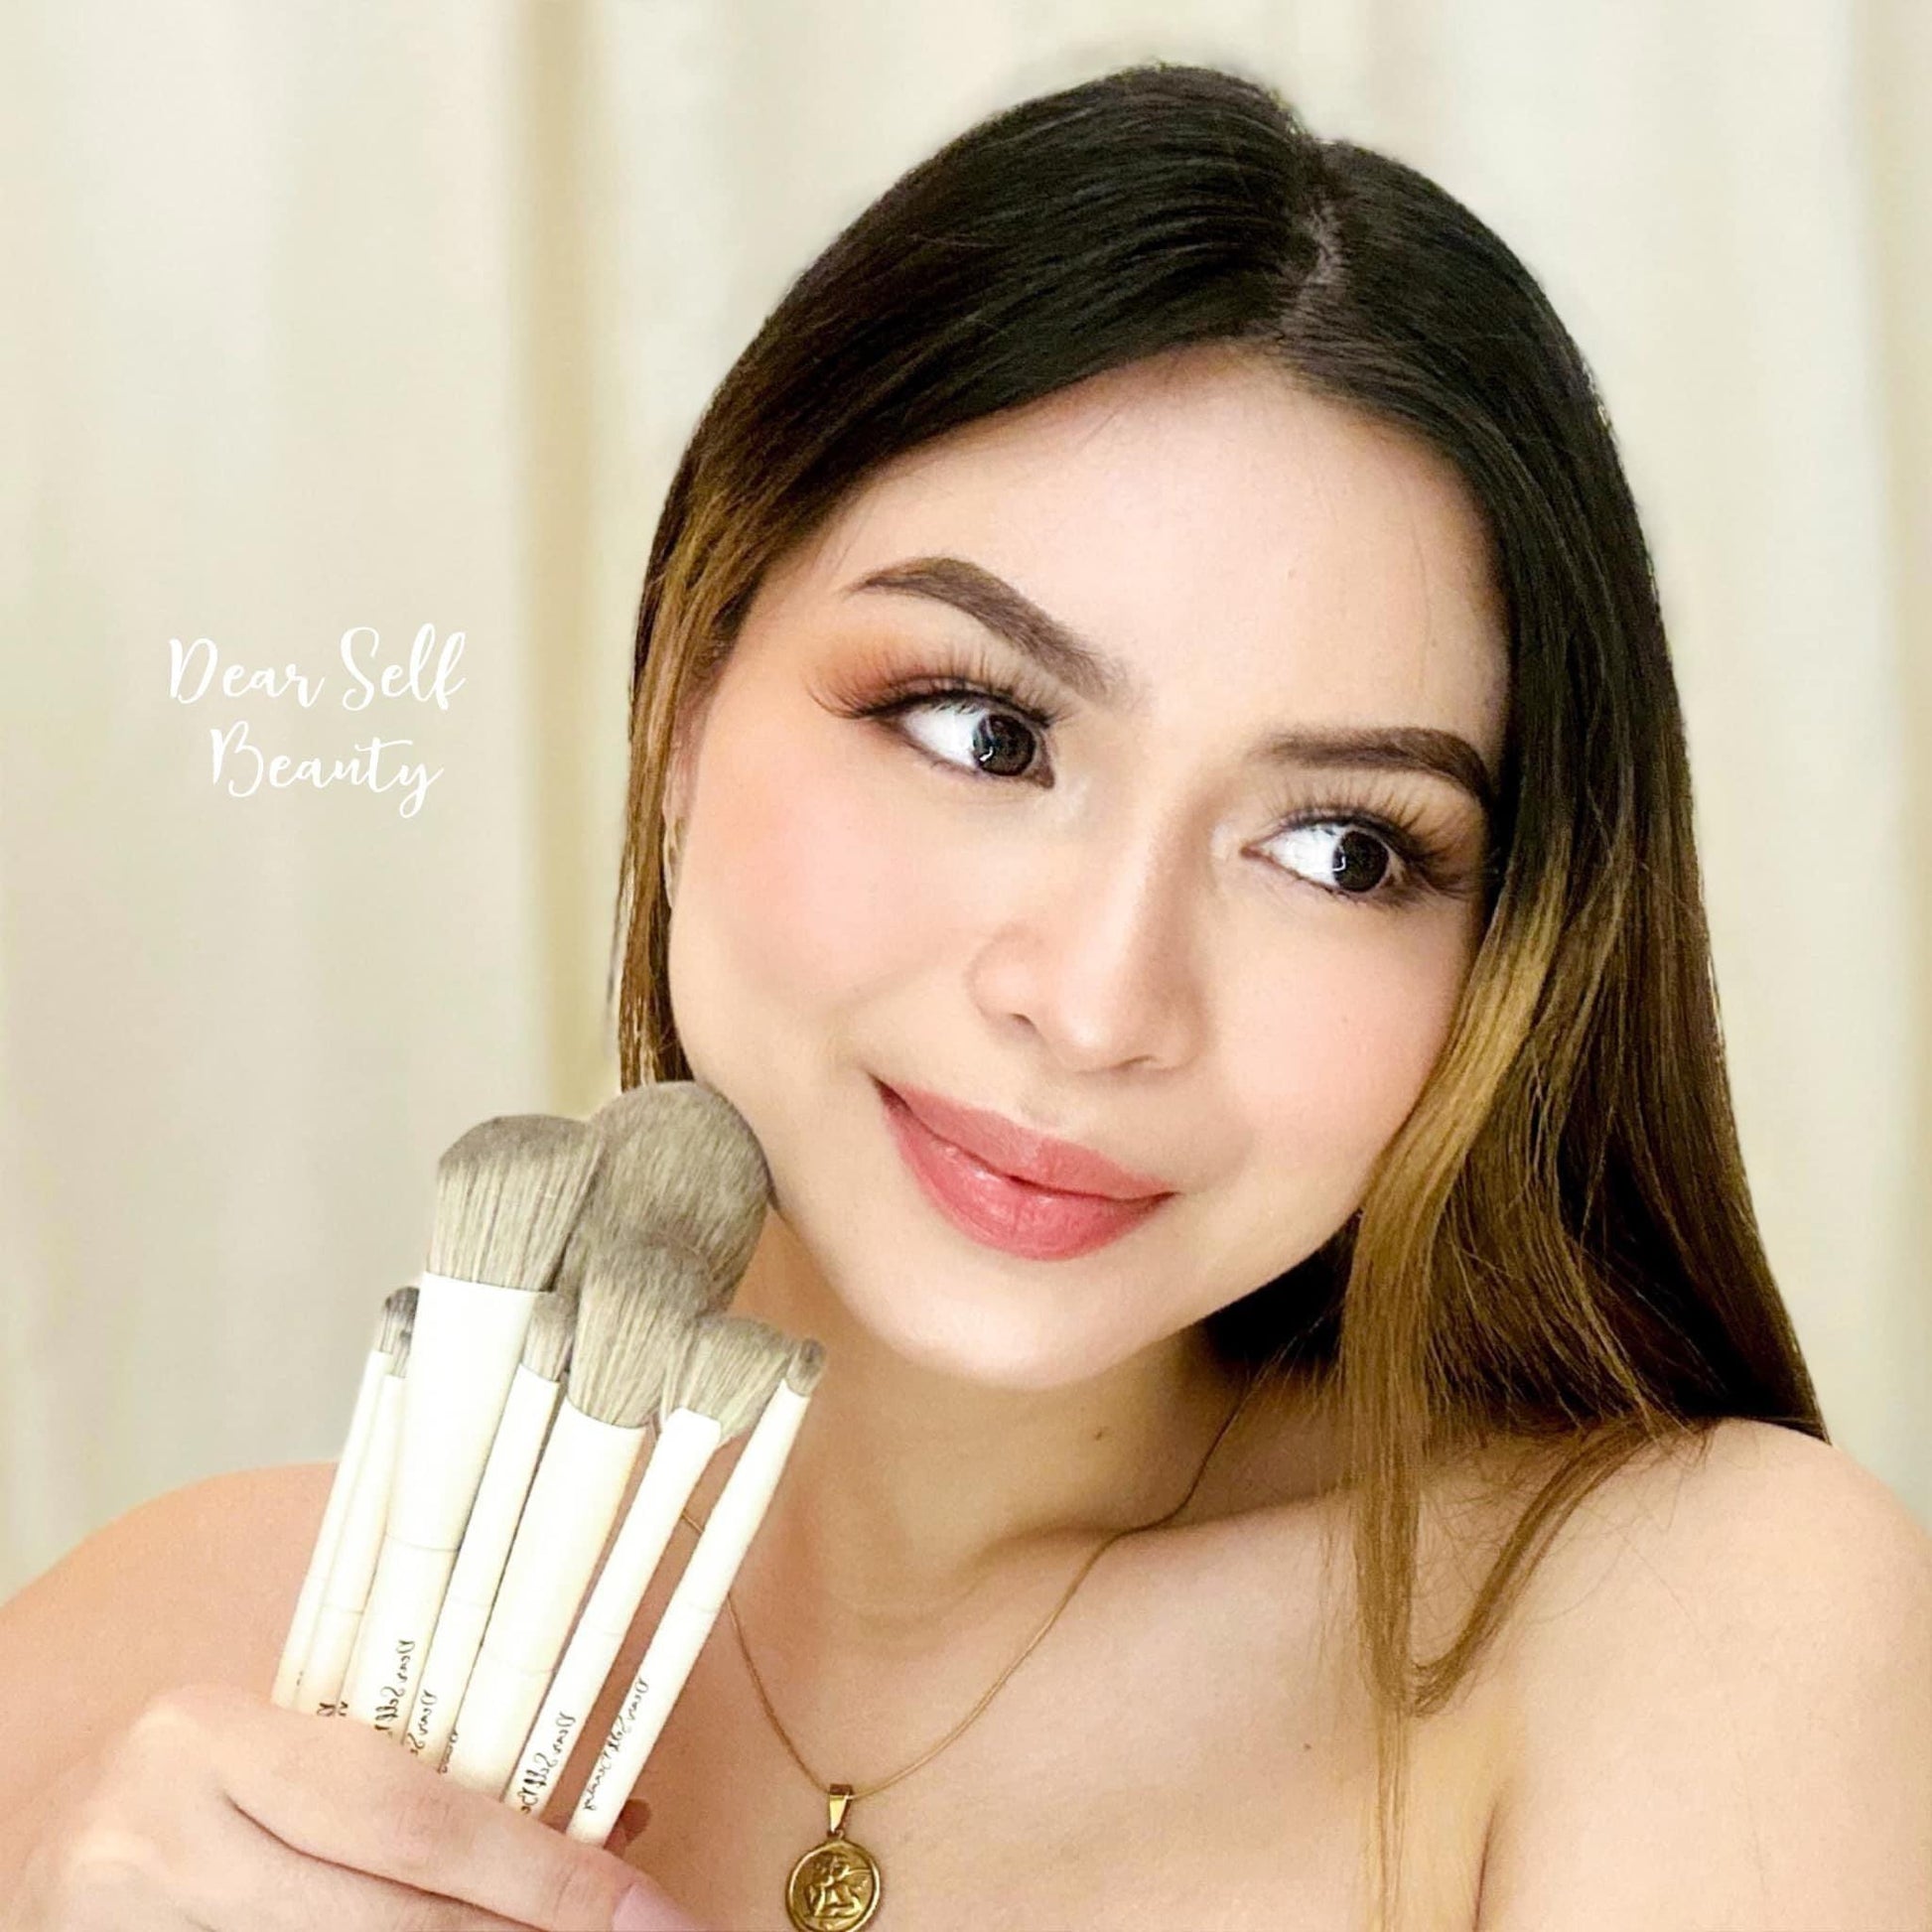 Dear Self Beauty Brush Set (PREORDER) - Astrid & Rose